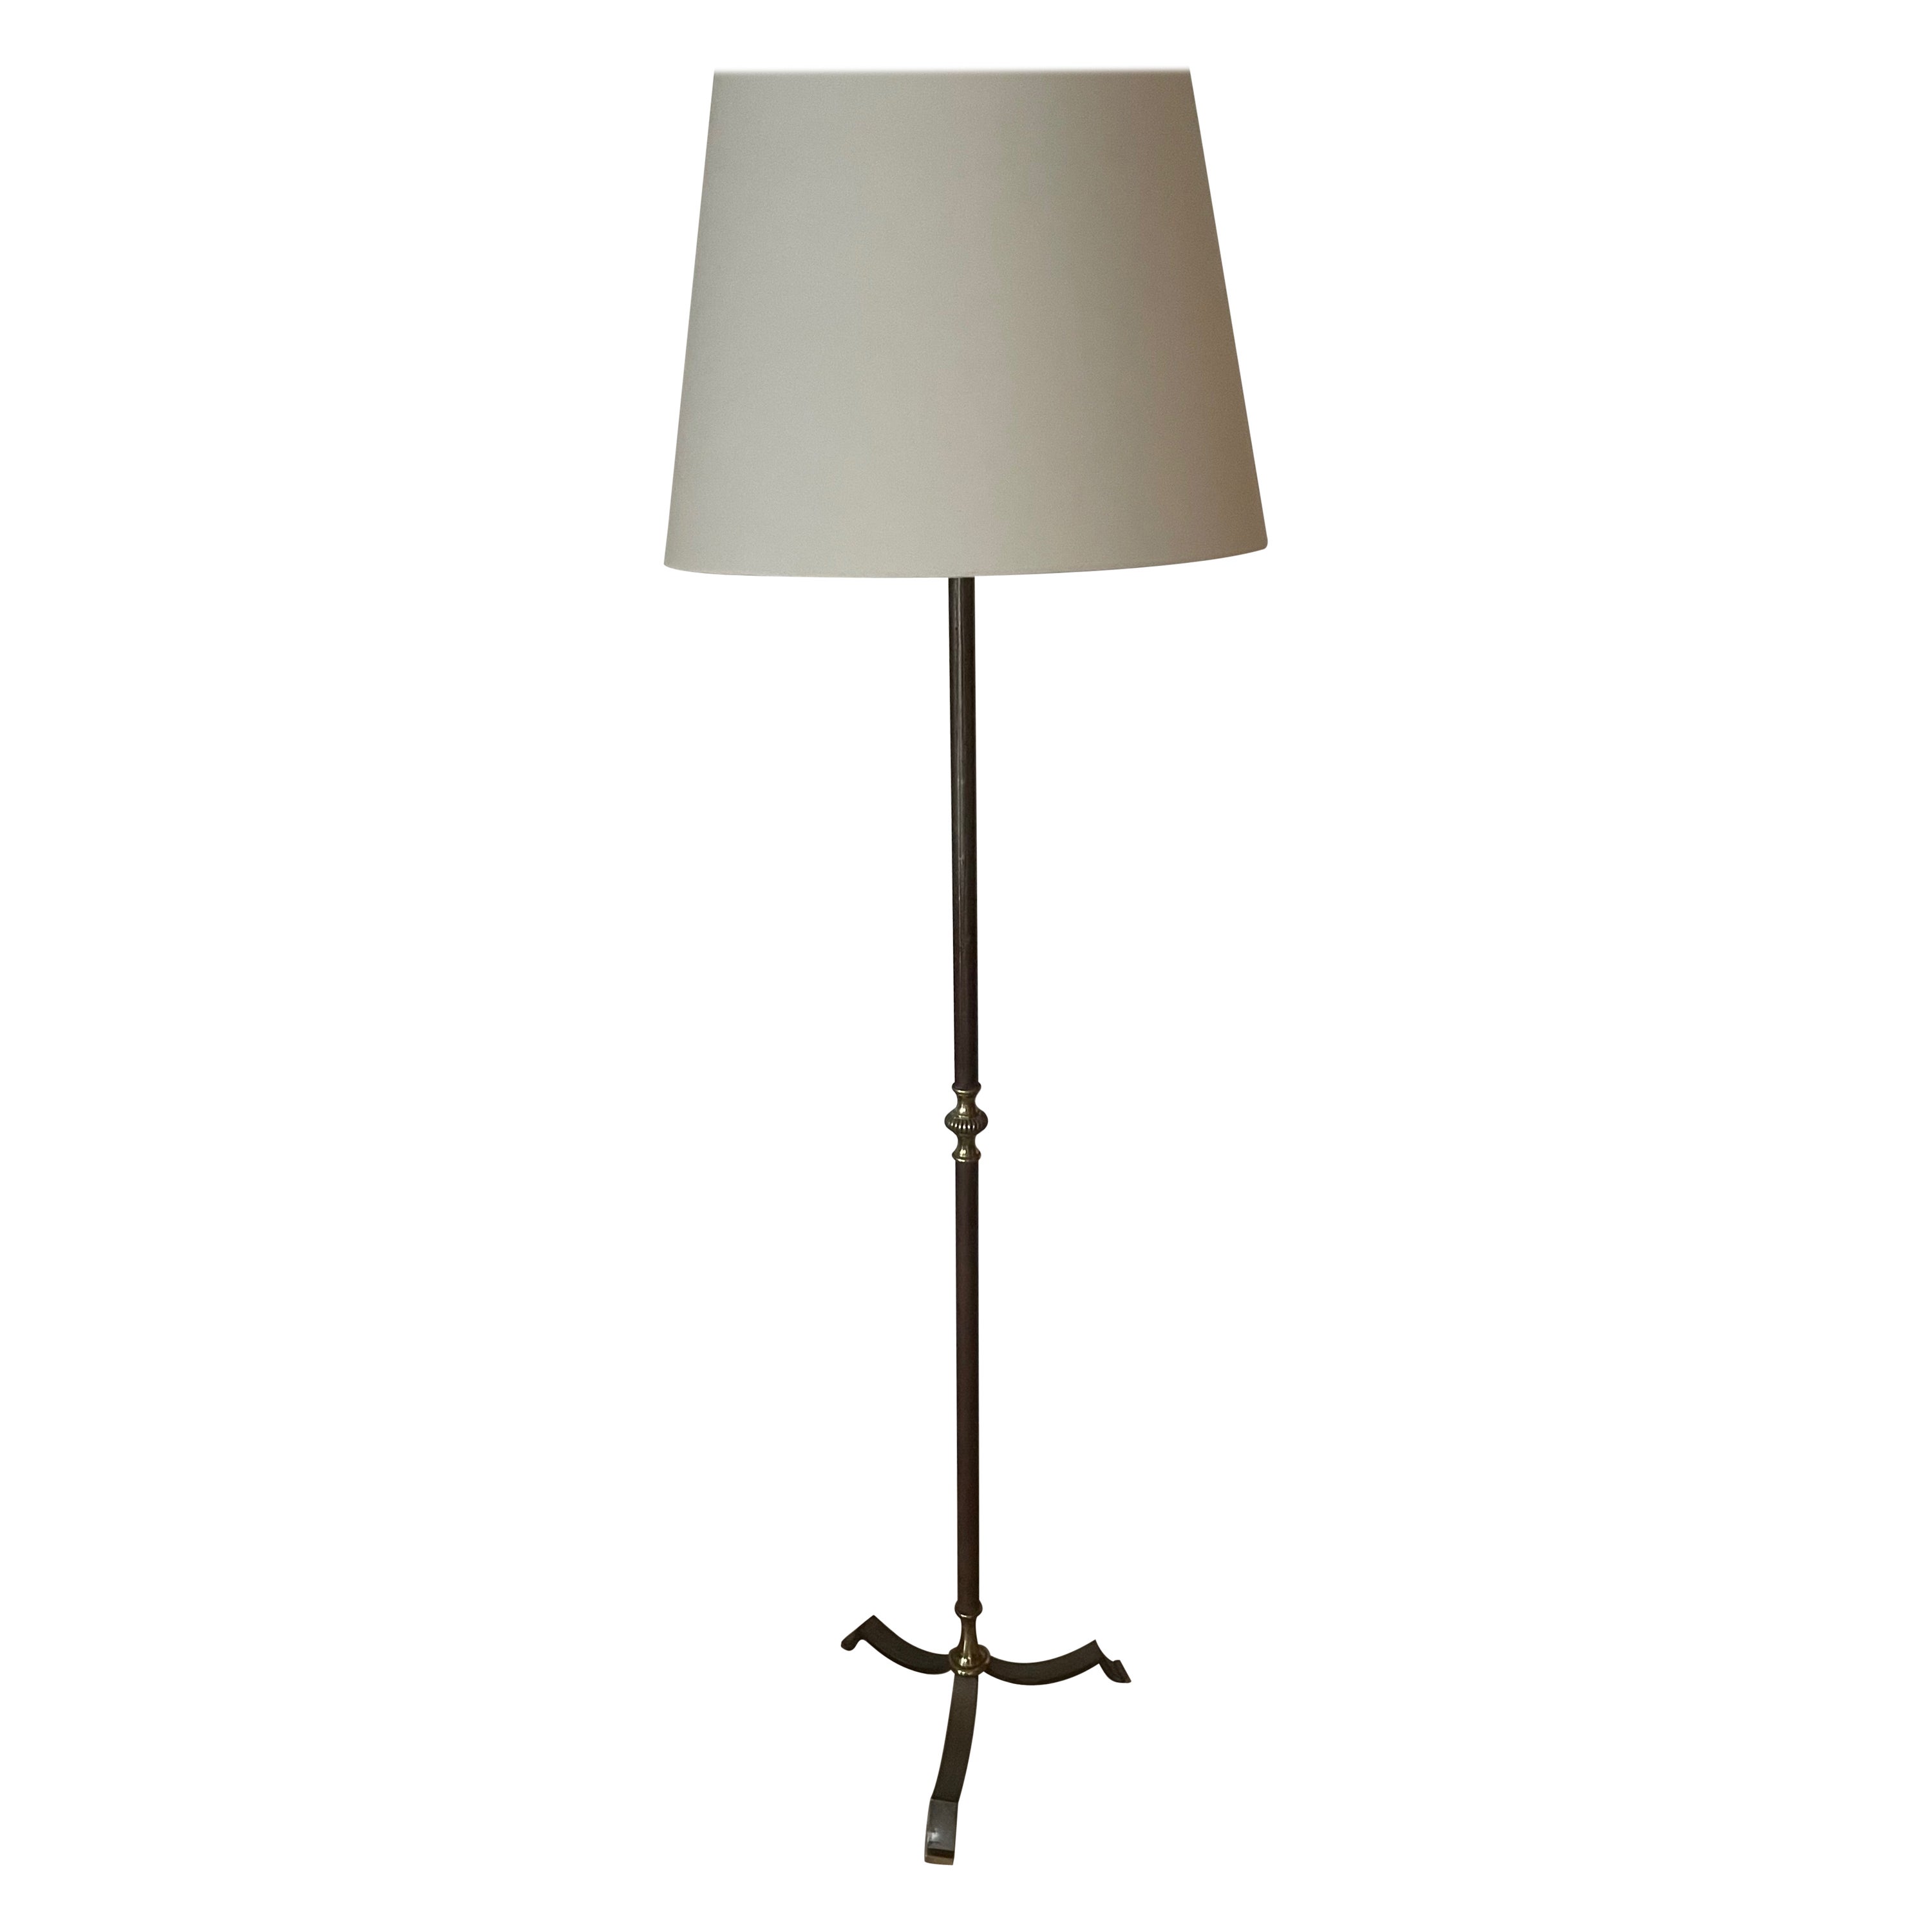 Elegant Neoclassical Tripod Floor Lamp by Maison Jansen, France 1950. For Sale